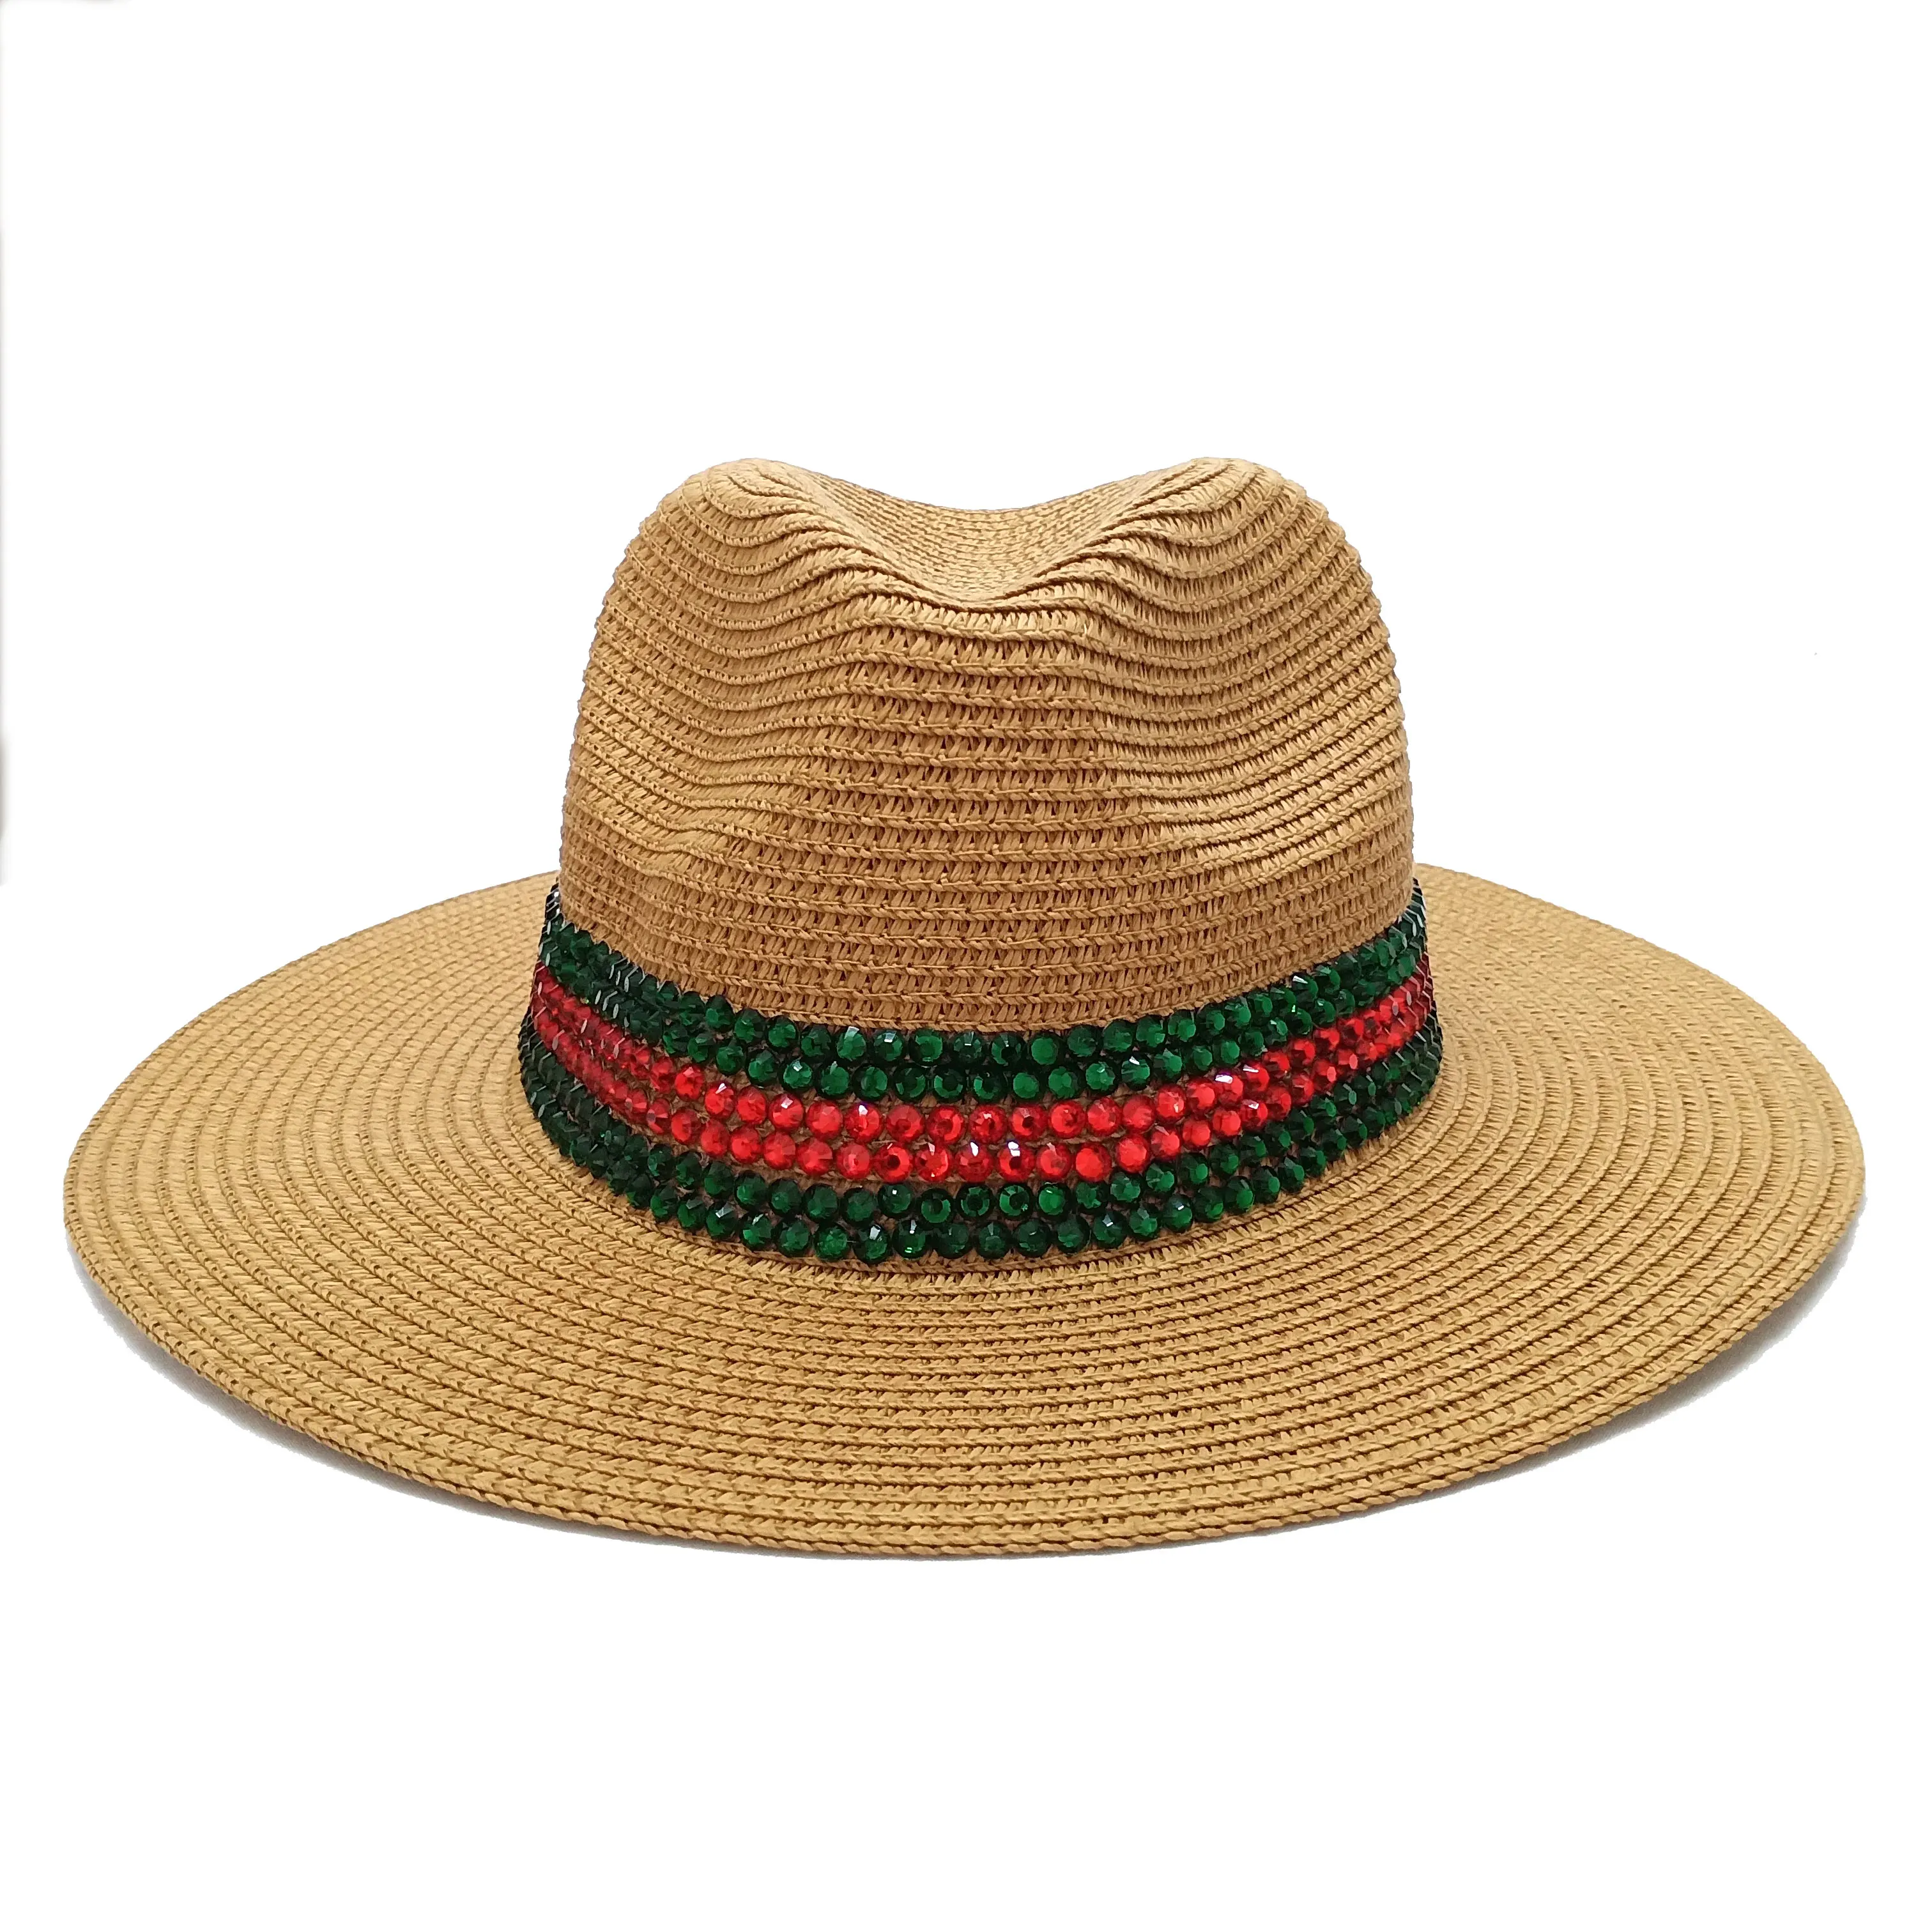 SUN Hat Straw Hat Pearl Bright Diamond Women's Hat Summer Outdoor Travel Beach Vacation Seaside Sun Hat Sunhat Bucket Hat 2021 6